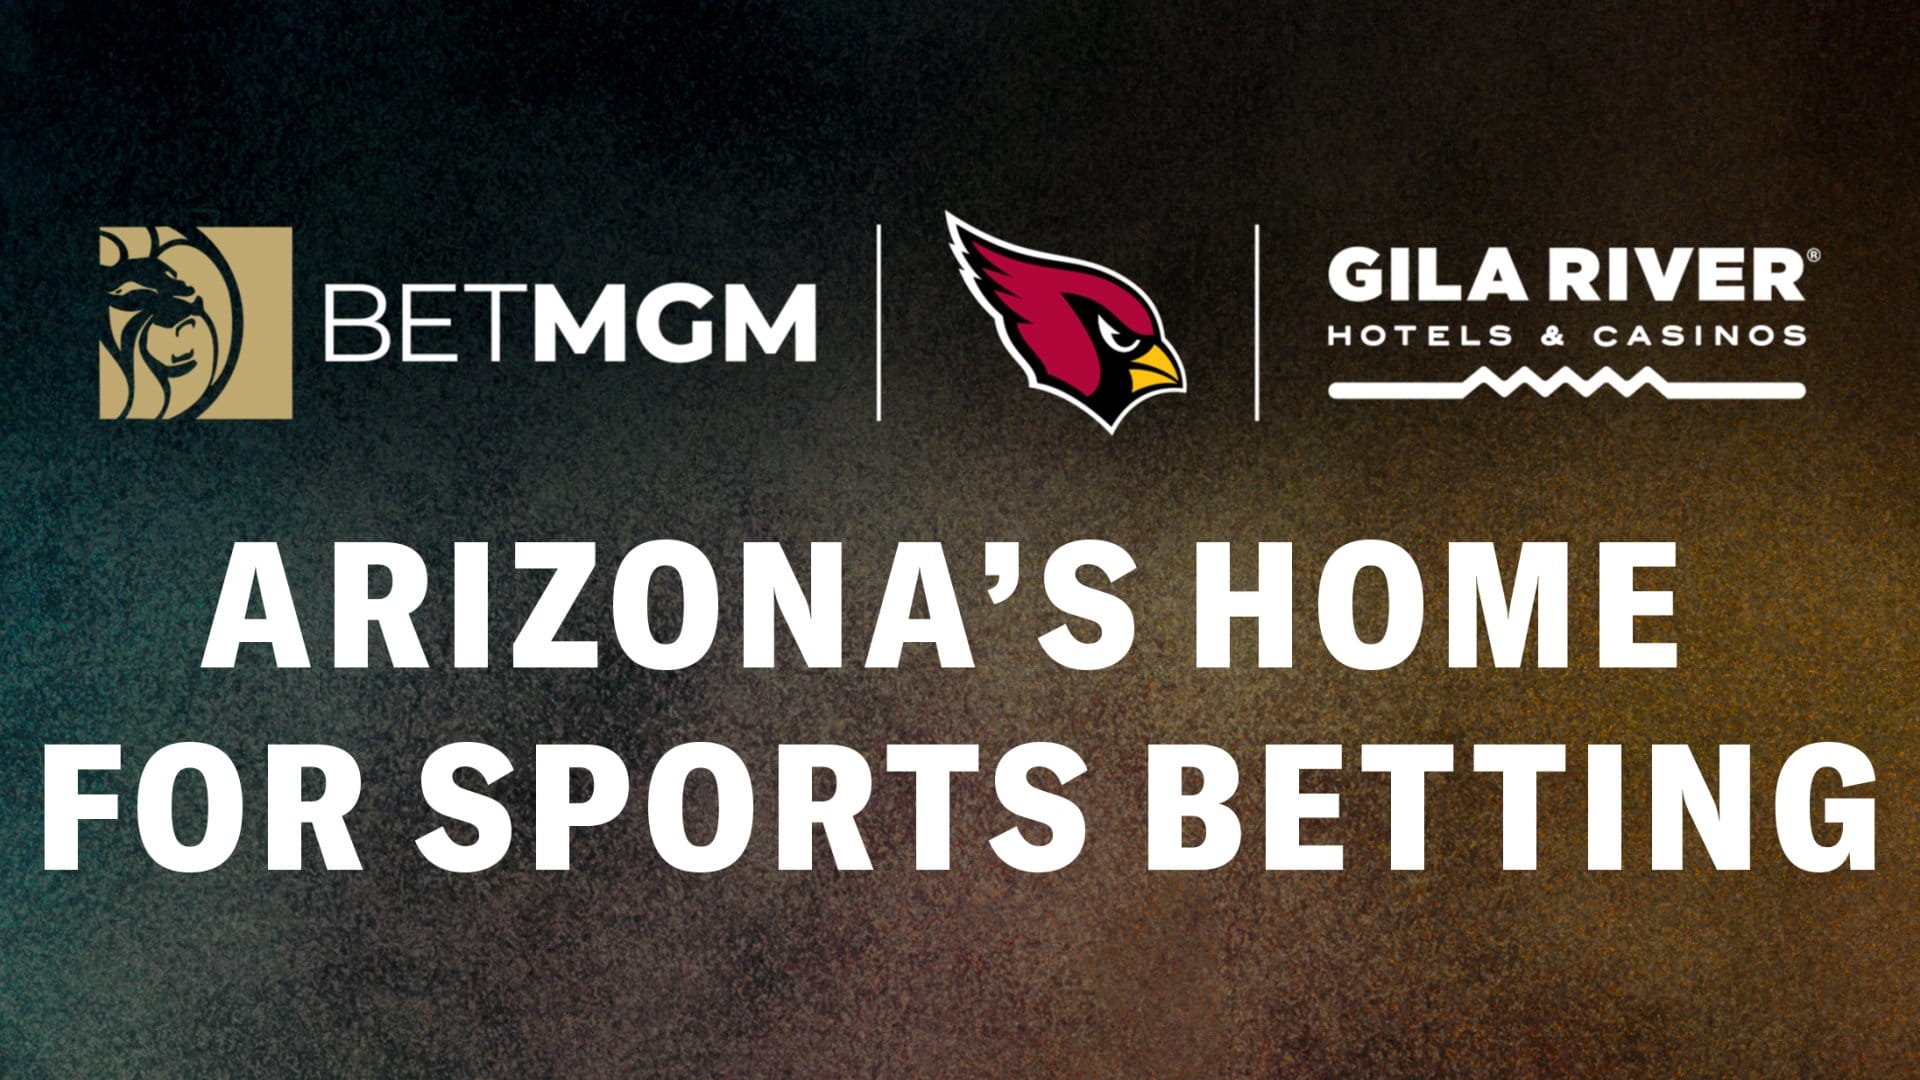 BetMGM logo next to the Arizona Cardinals logo next to the Gila River Hotels & Casino logo